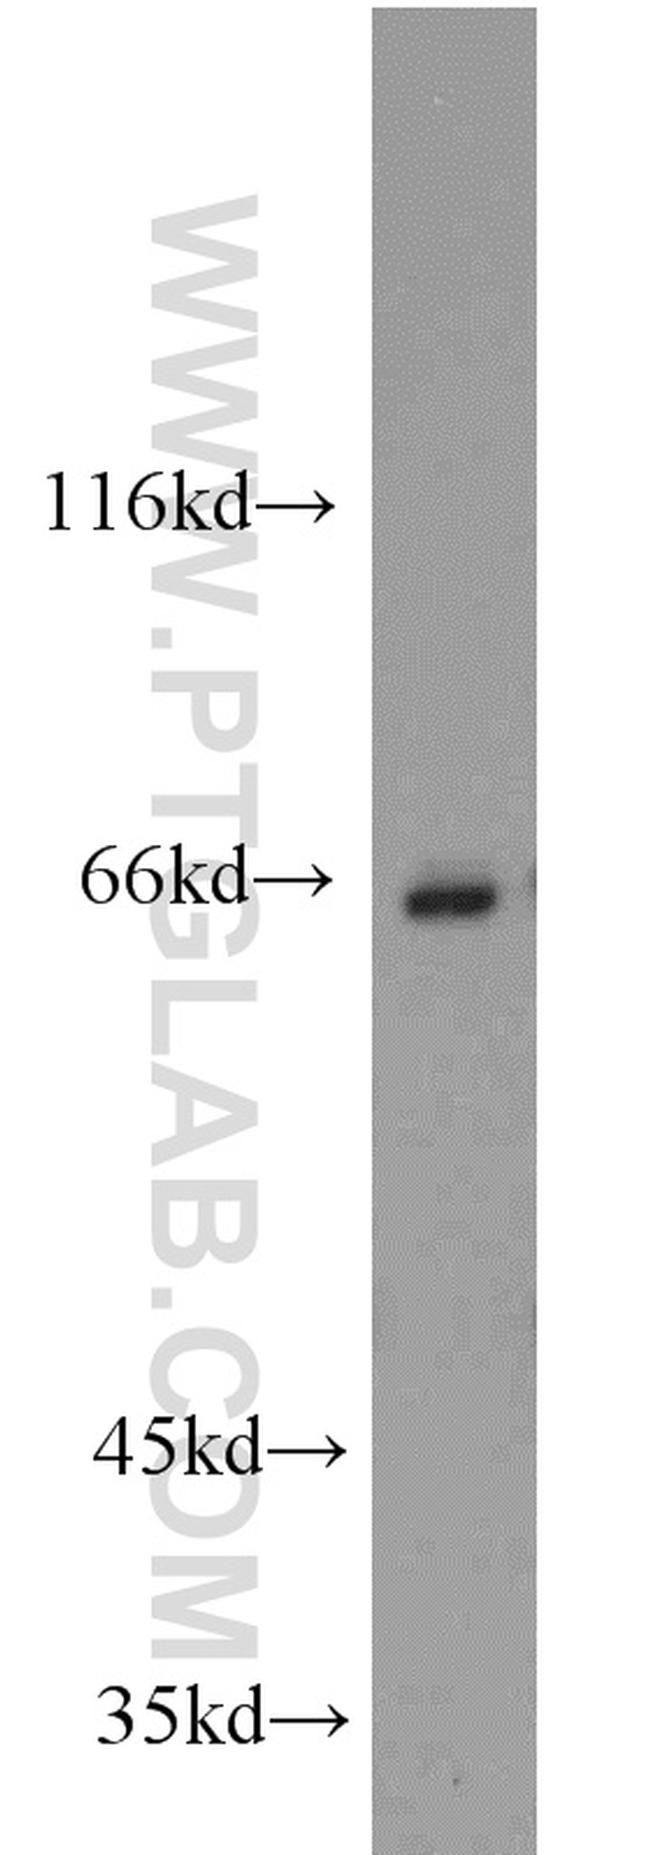 CBFA2T3 Antibody in Western Blot (WB)